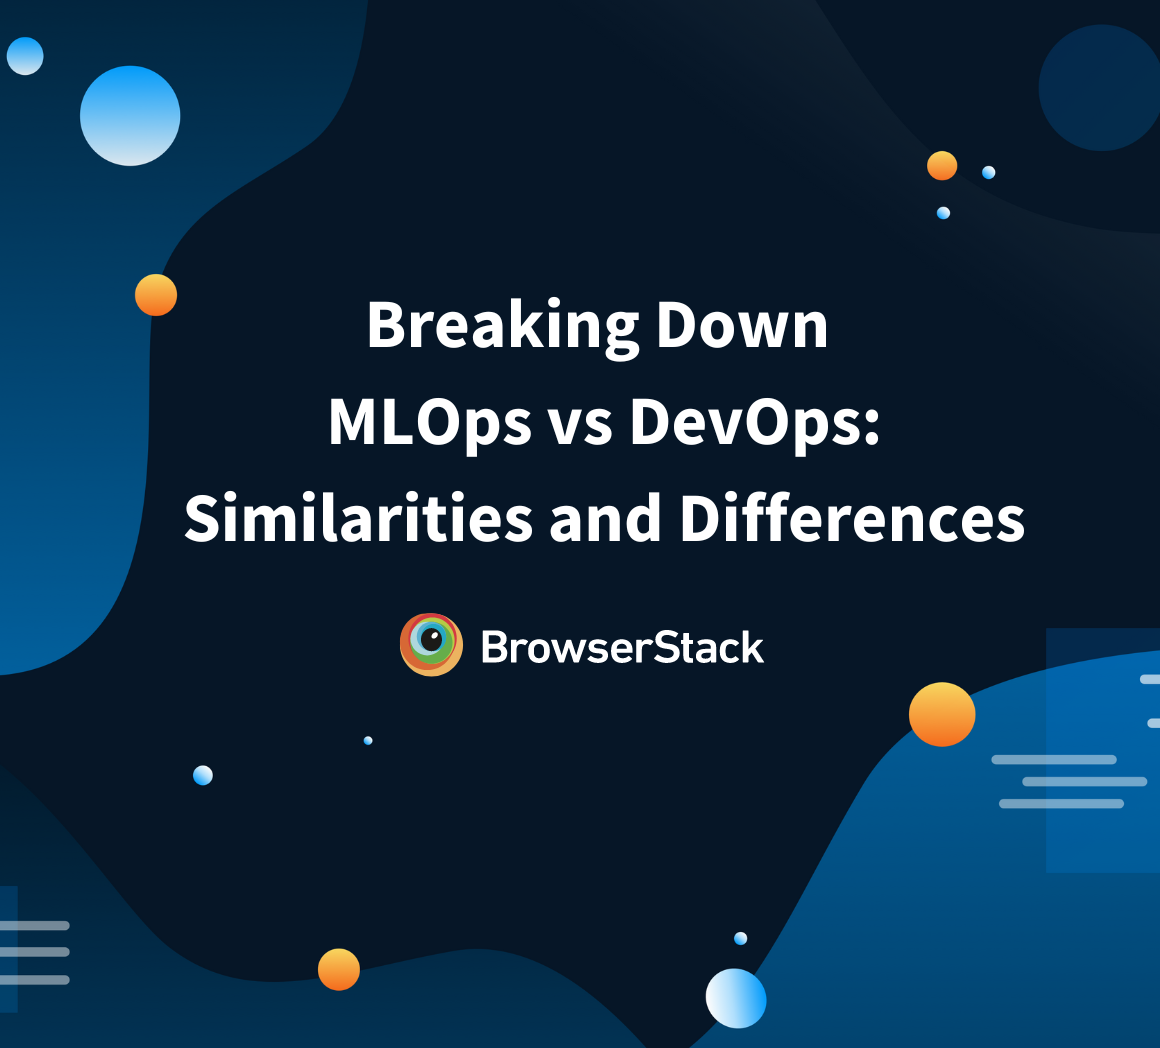 Breaking Down MLOps vs DevOps Similarities and Differences